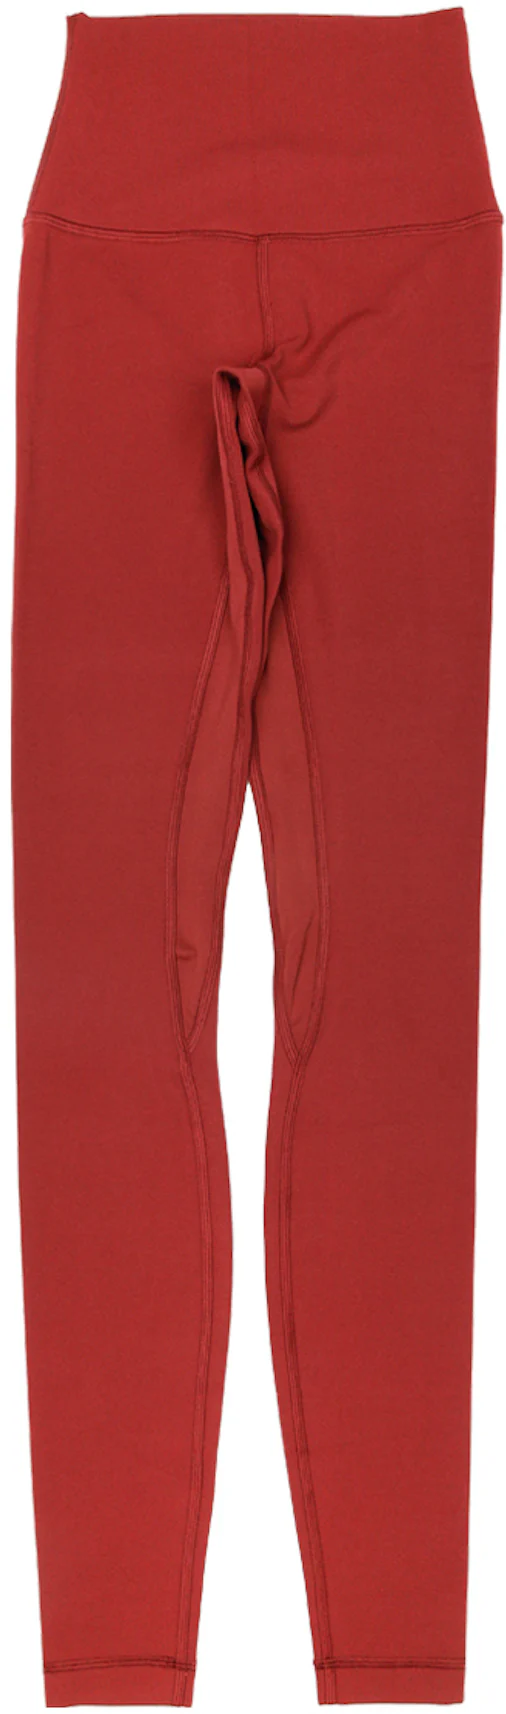 Lululemon Align Pant 25 LNY Dark Red size 6